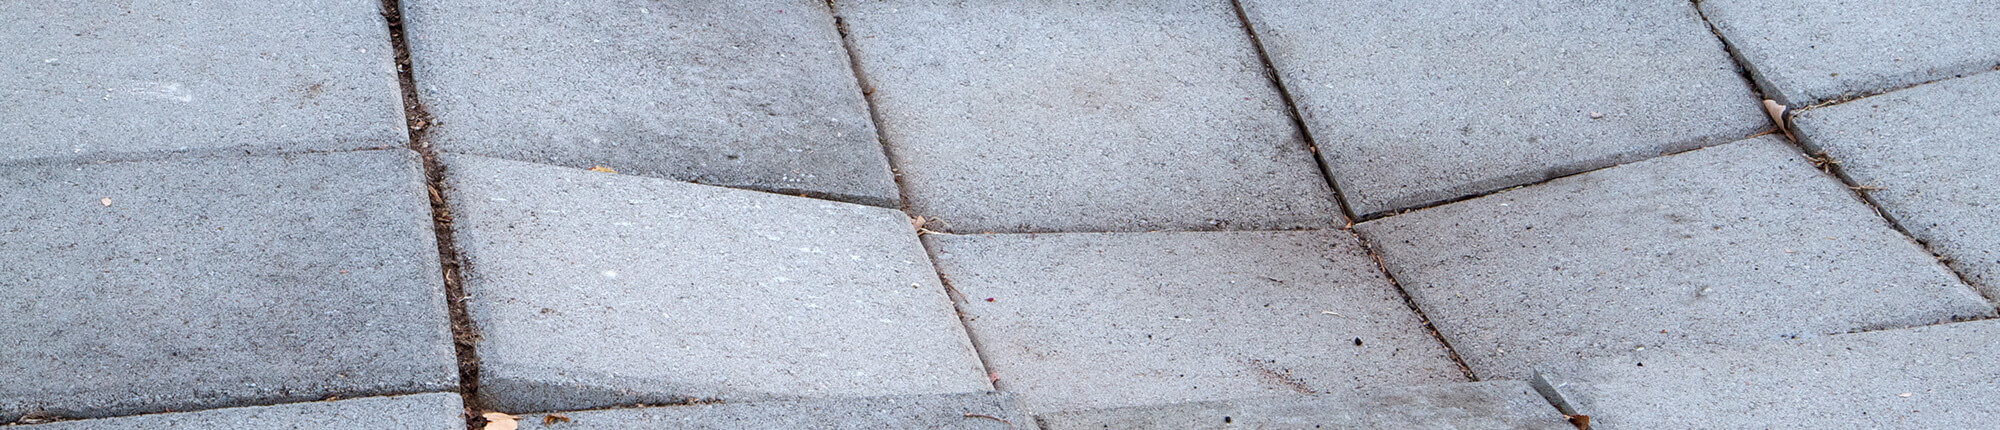 Sunken concrete sidewalk tiles